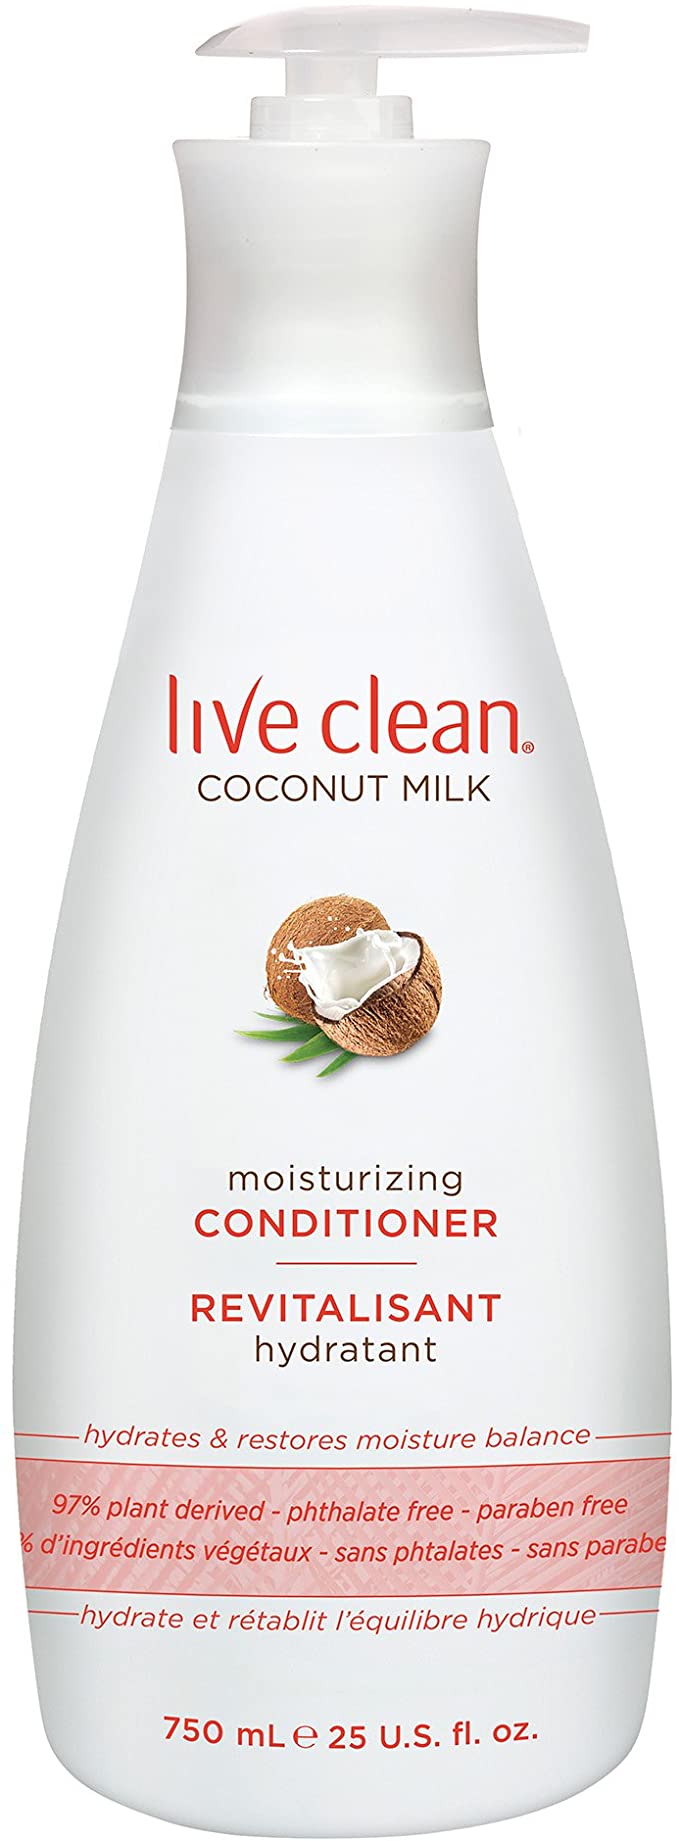 Live Clean Conditioner, Moisturizing Coconut Milk, 750 mL